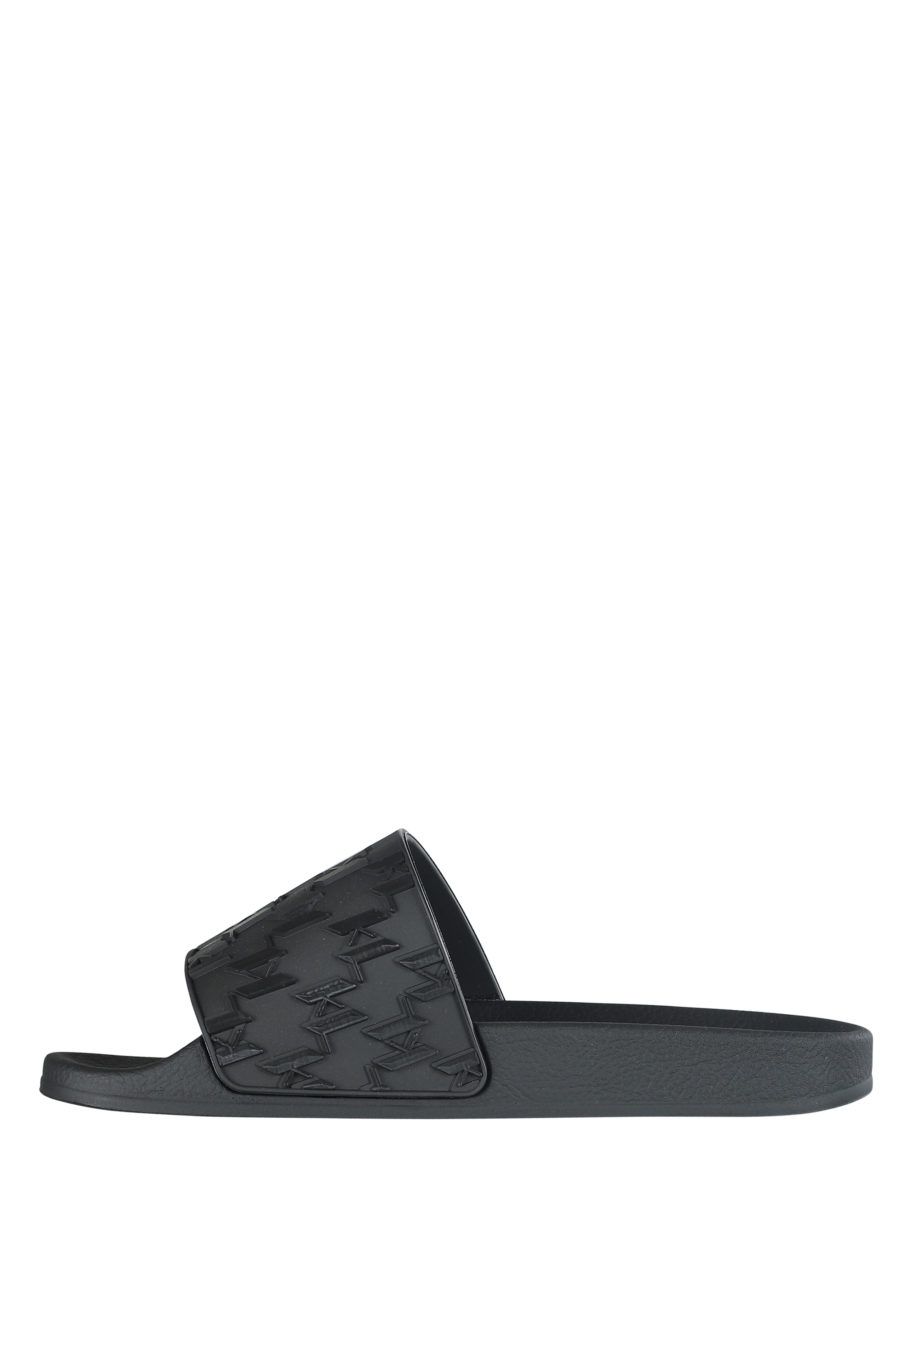 Black flip flops with black monogram - IMG 5326